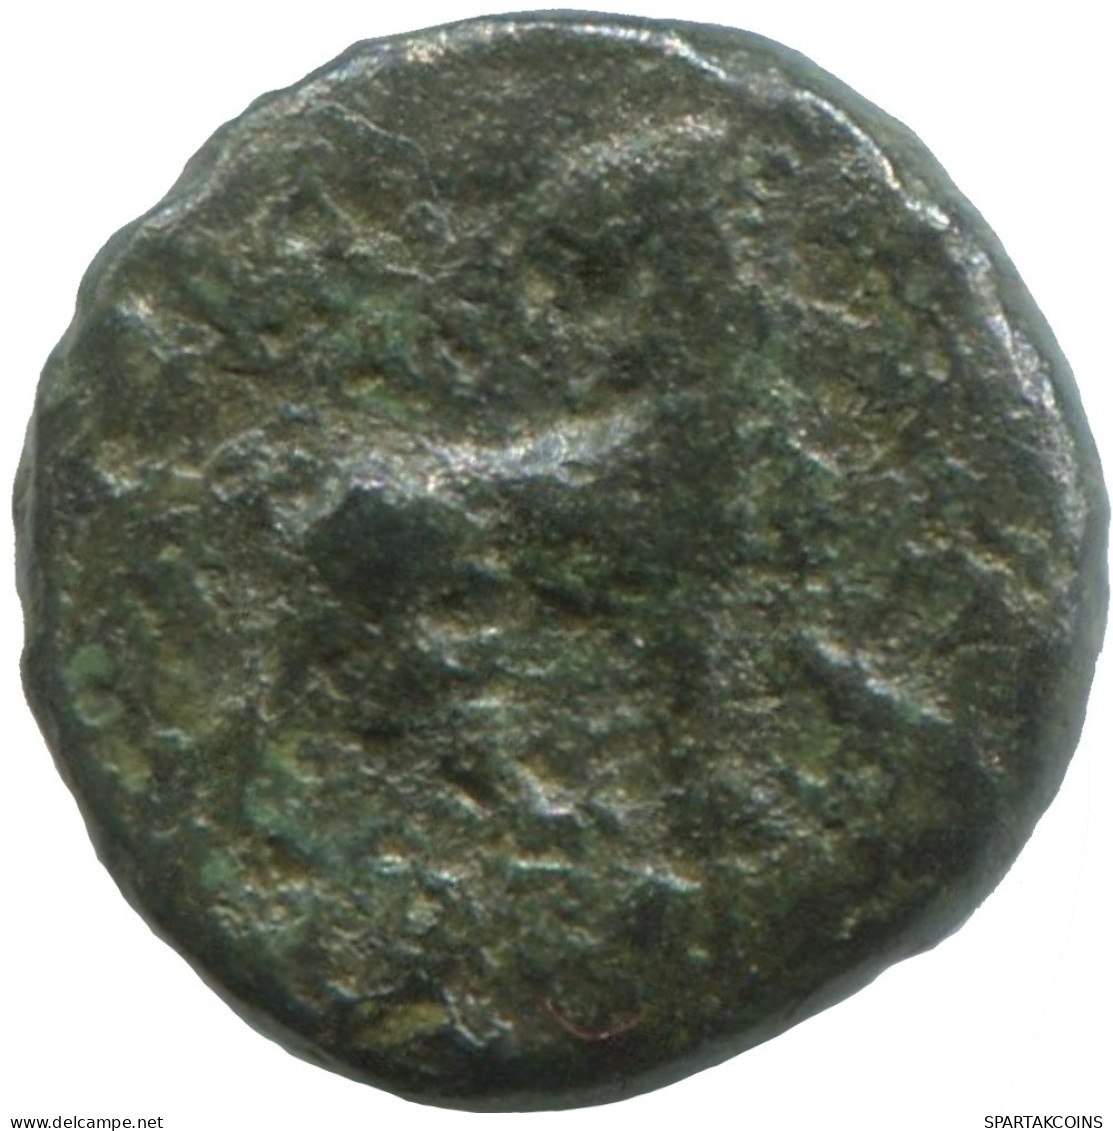 HORSE Antike Authentische Original GRIECHISCHE Münze 0.8g/10mm #SAV1414.11.D.A - Grecques